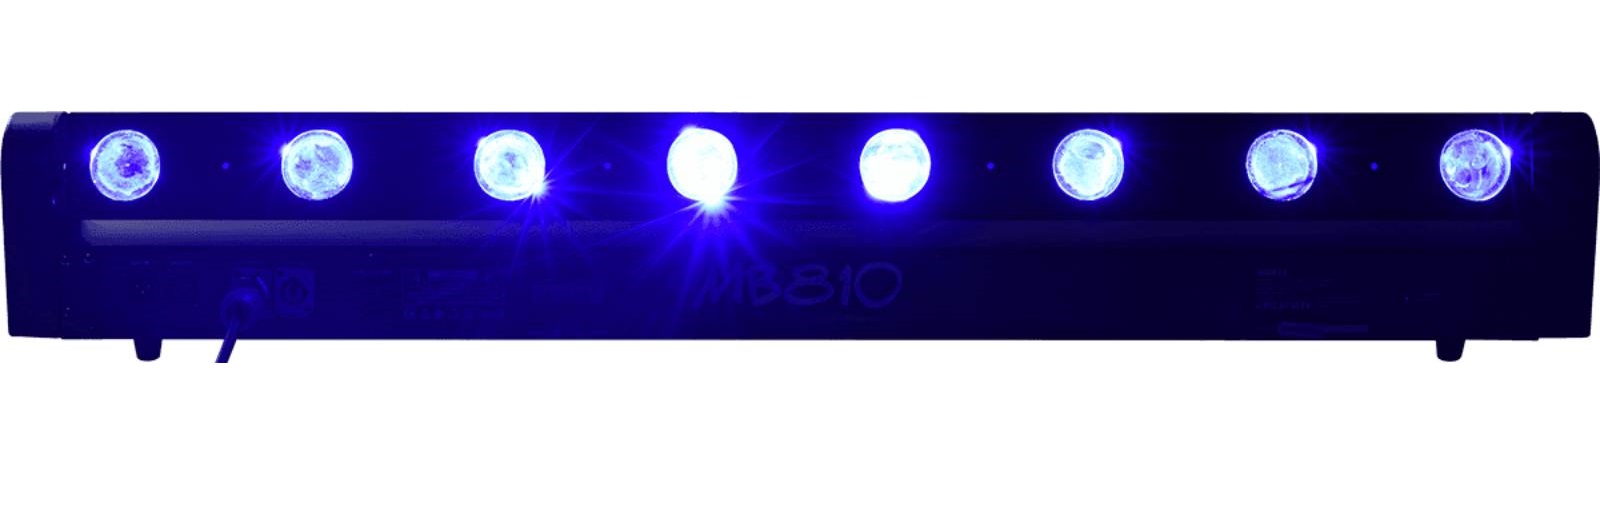 ALGAM LIGHTING MB 810 - BARRE 8 LEDS MOTORISES RGBW